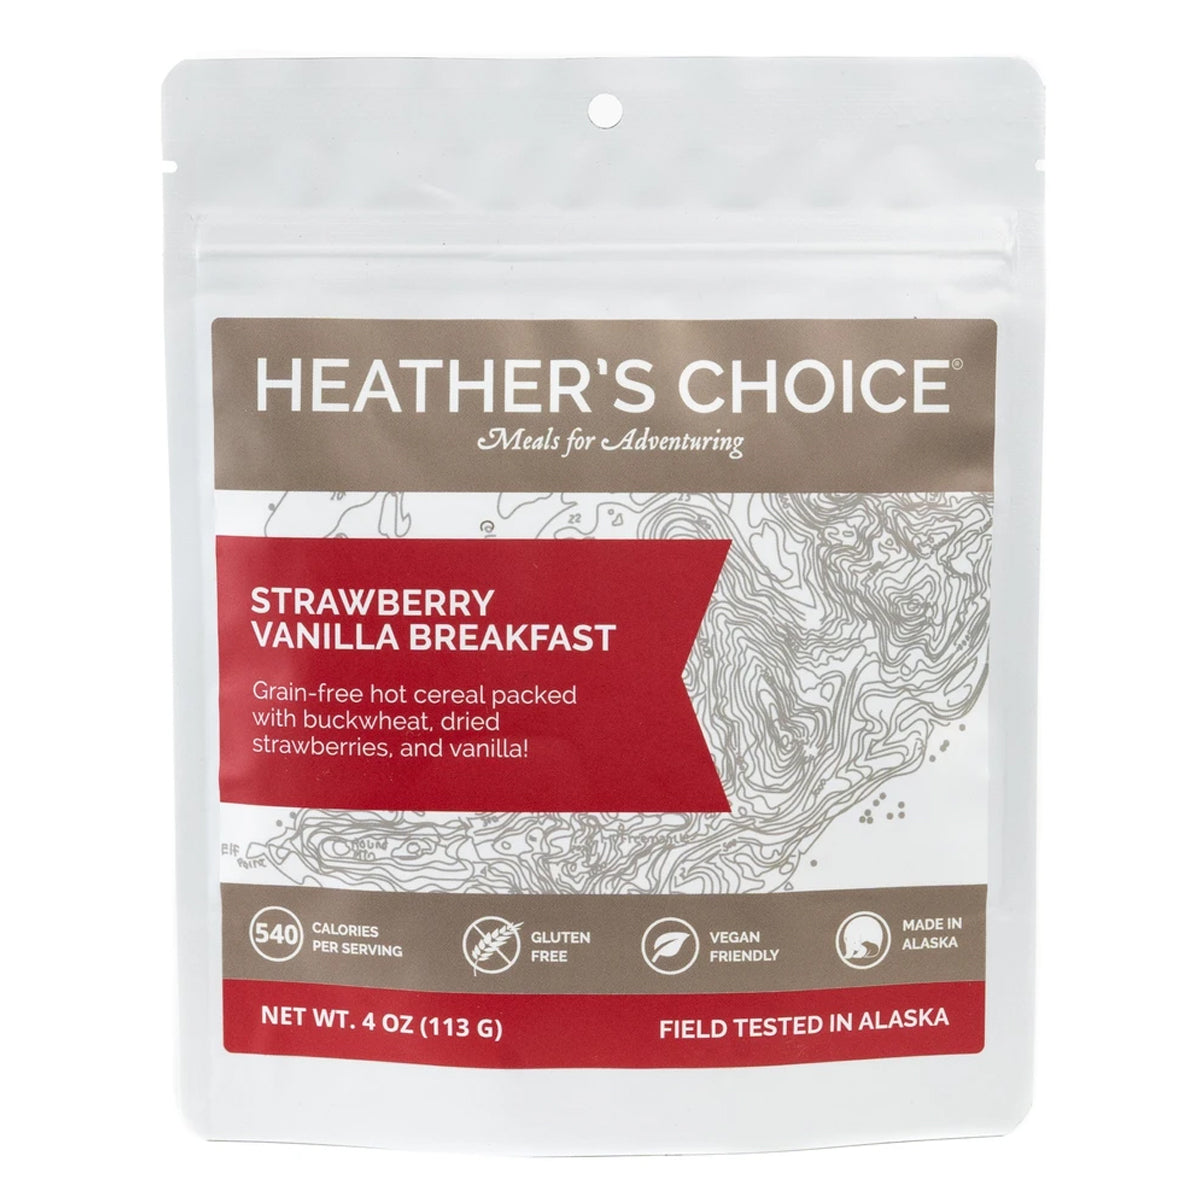 Heather's Choice Strawberry Vanilla Breakfast